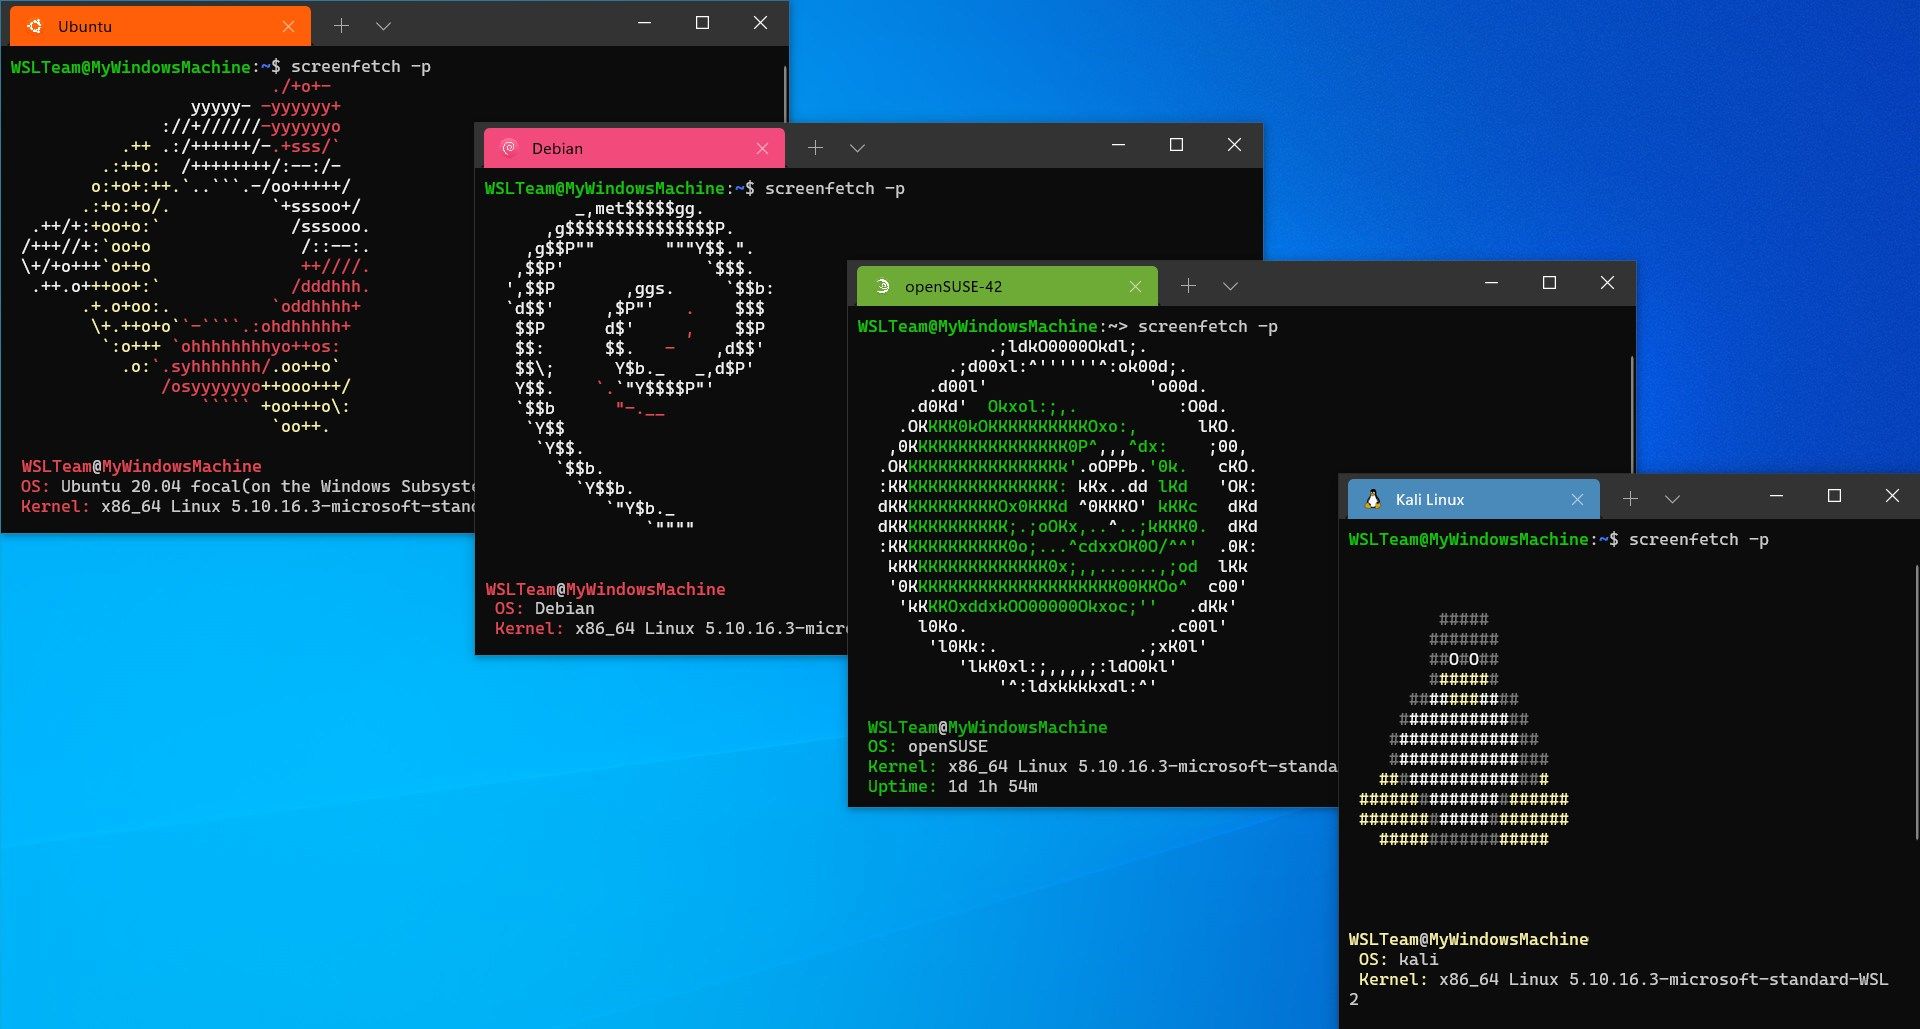 Windows Subsystem for Linux distributions arranged on the Windows Desktop